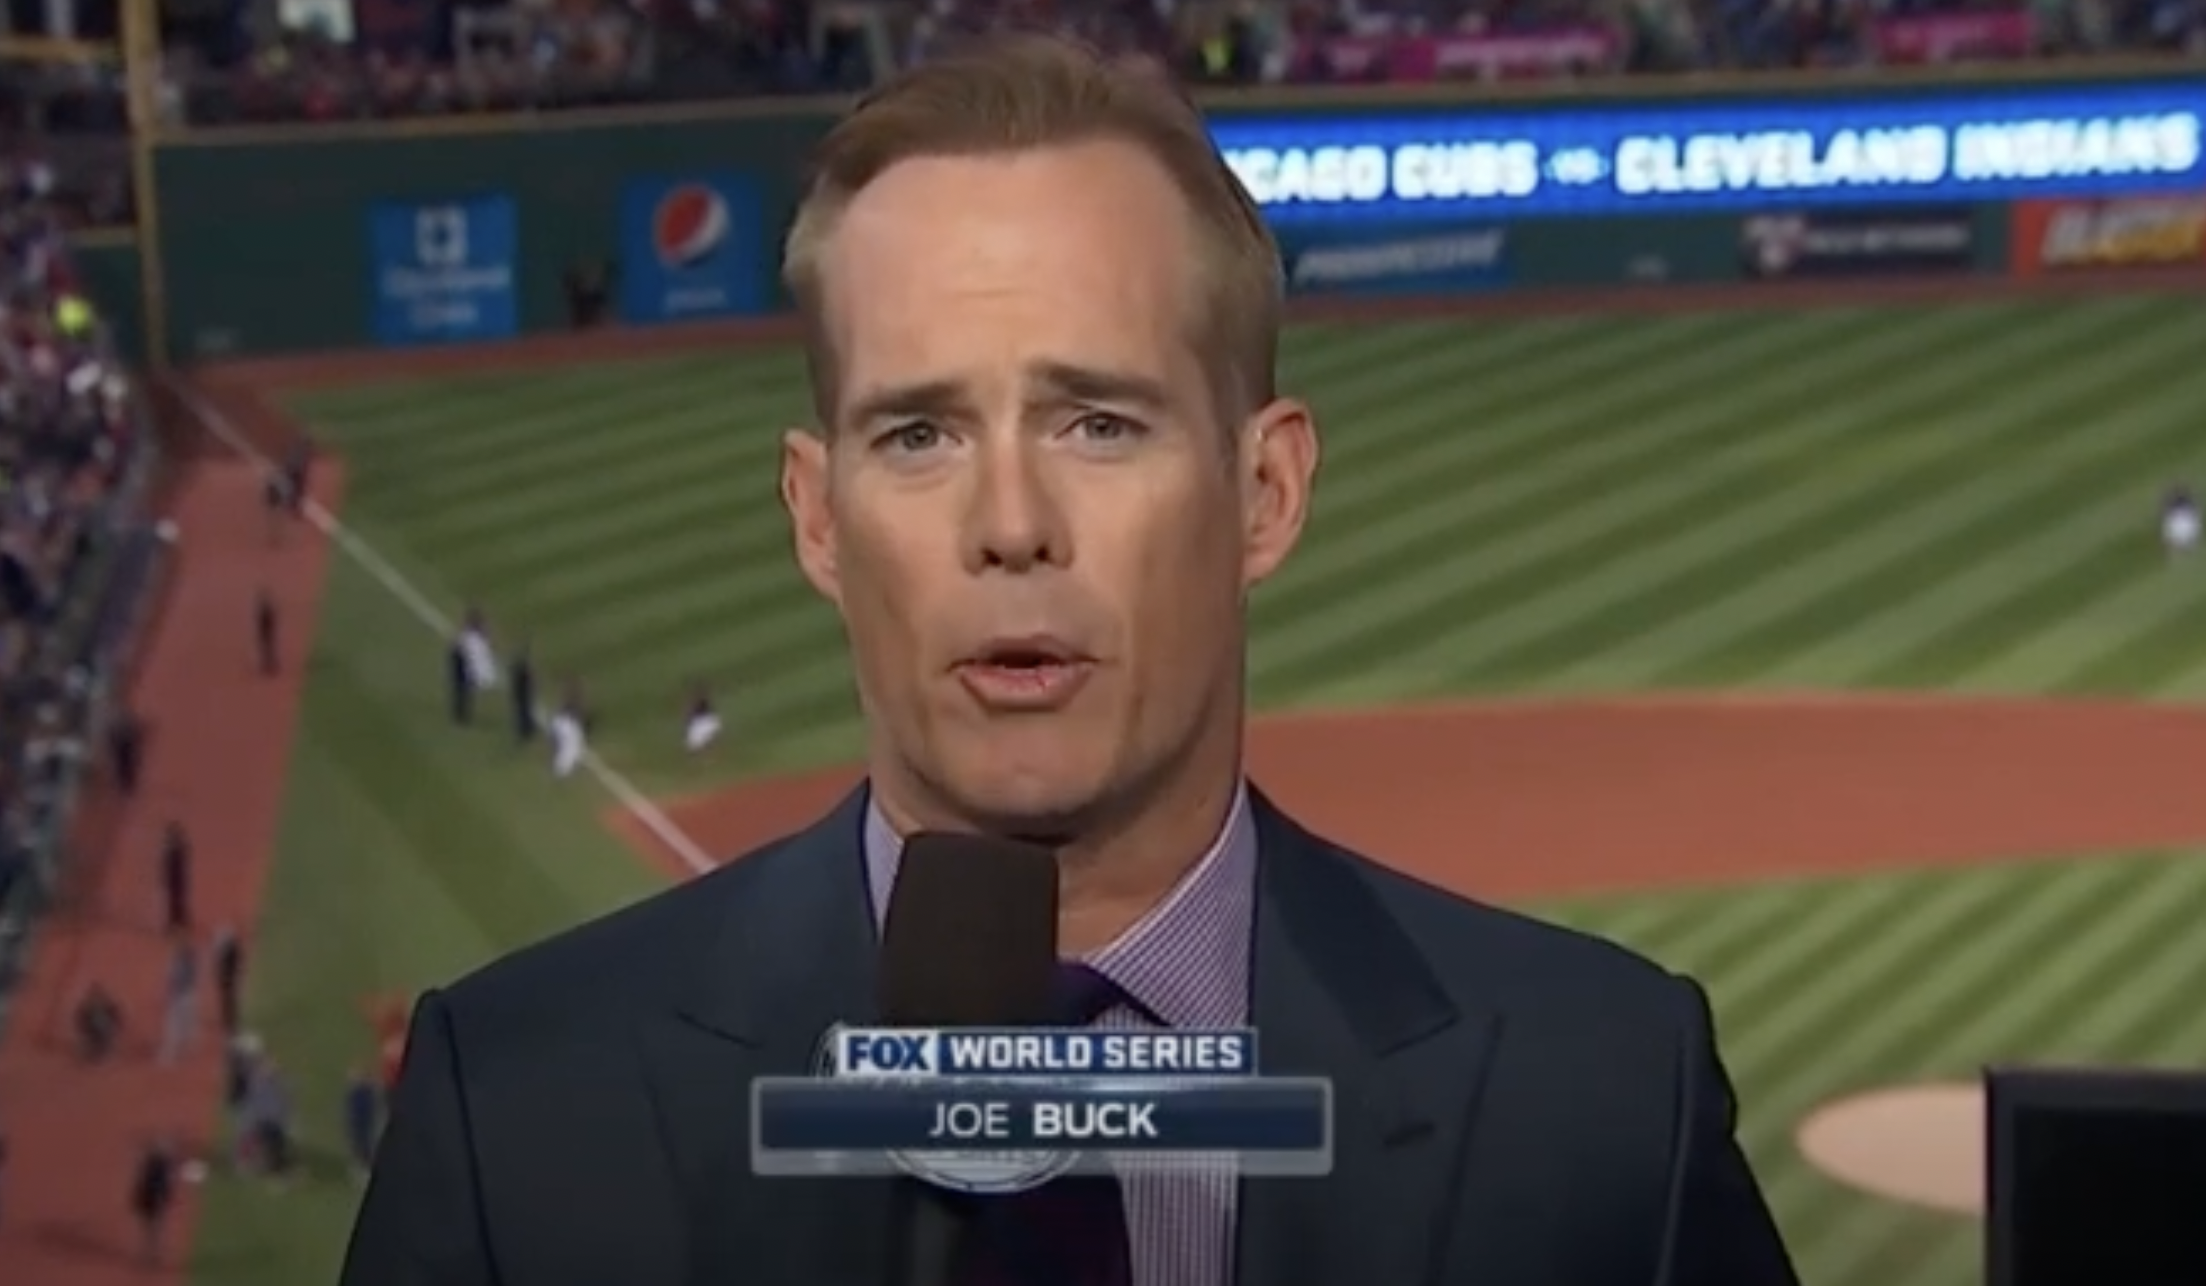 Joe Buck on Fox World Series coverage.